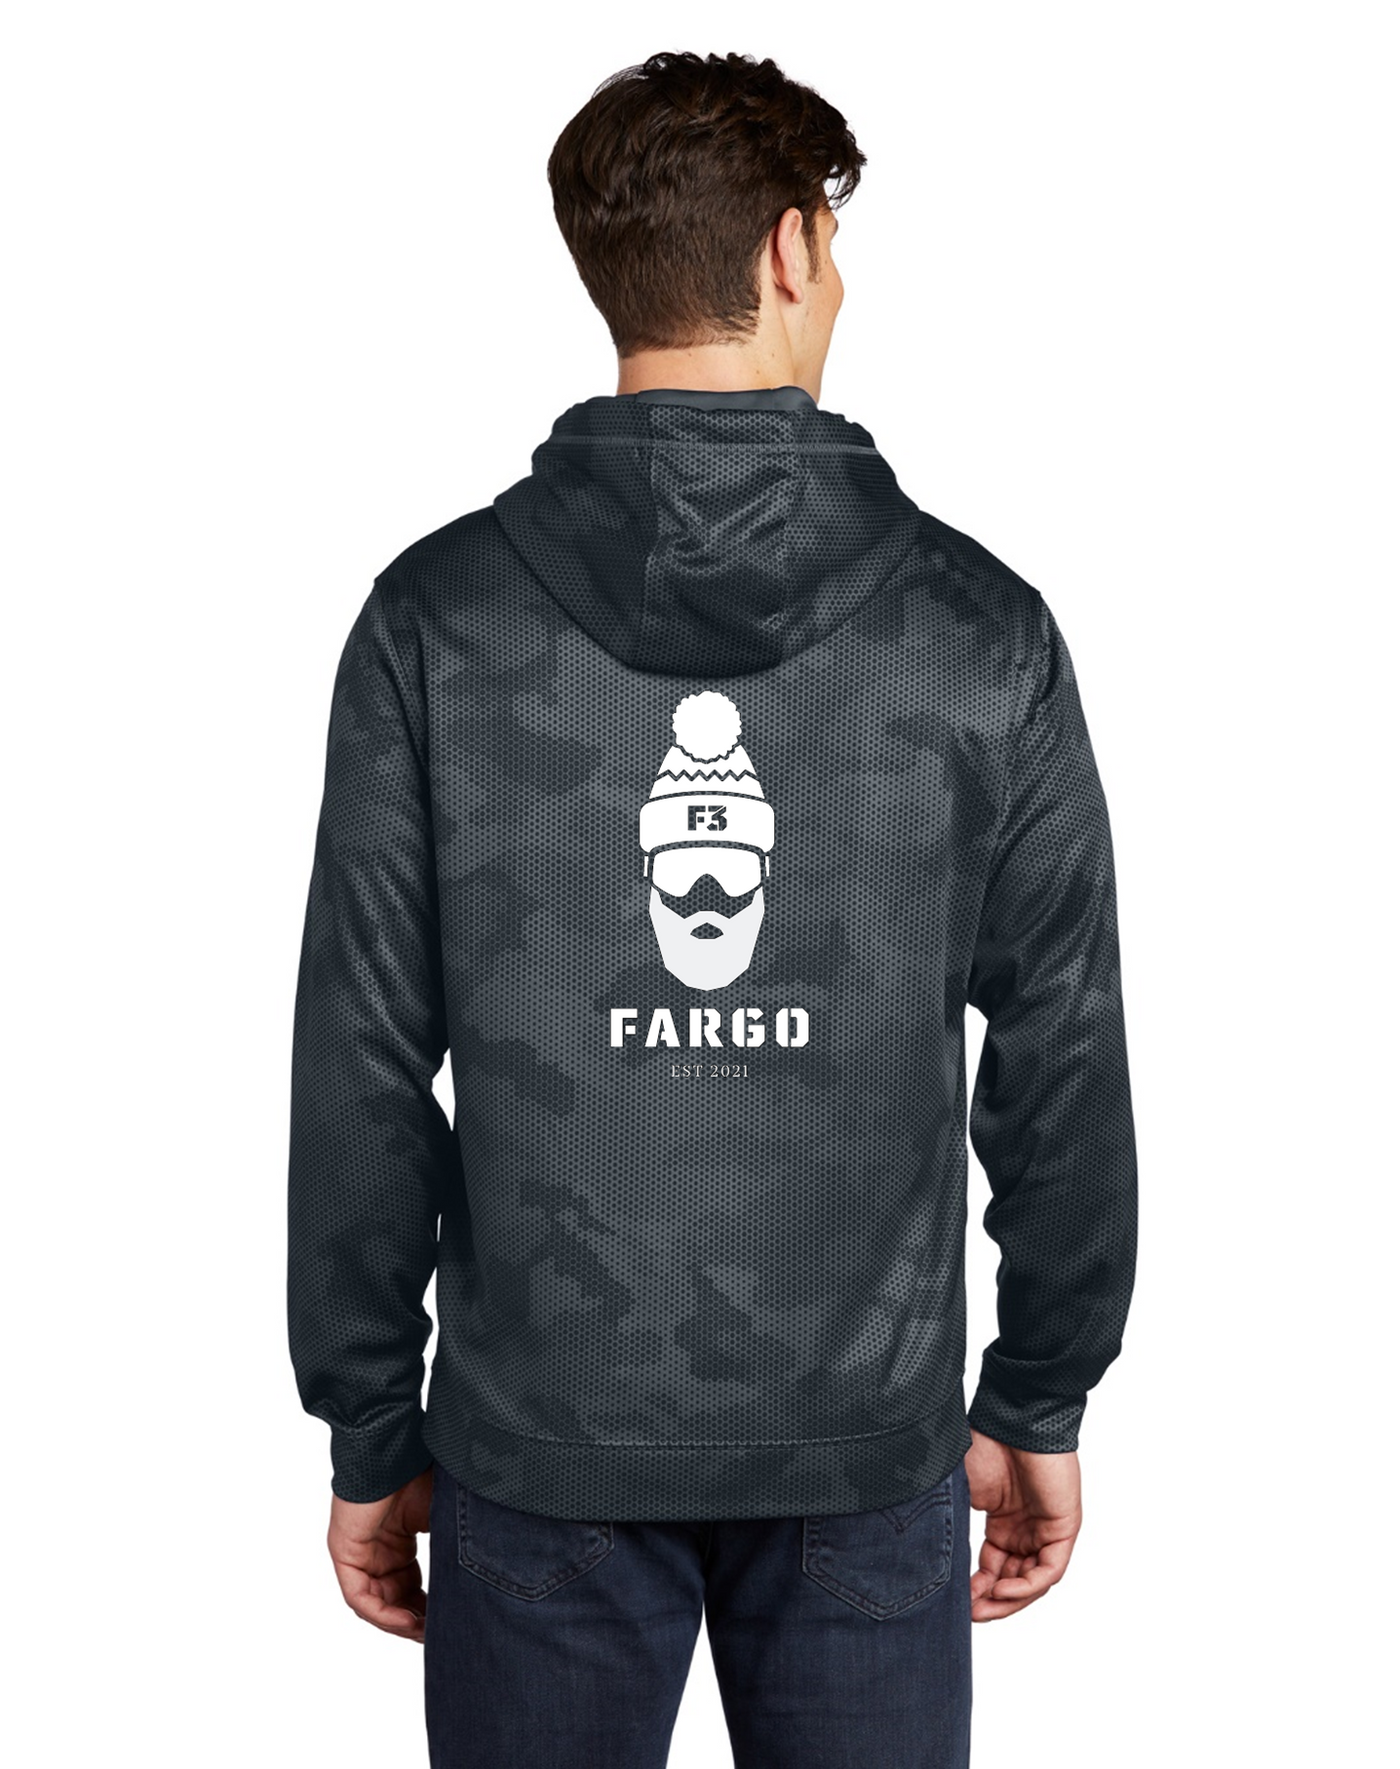 F3 Fargo Pre-Order July 2023